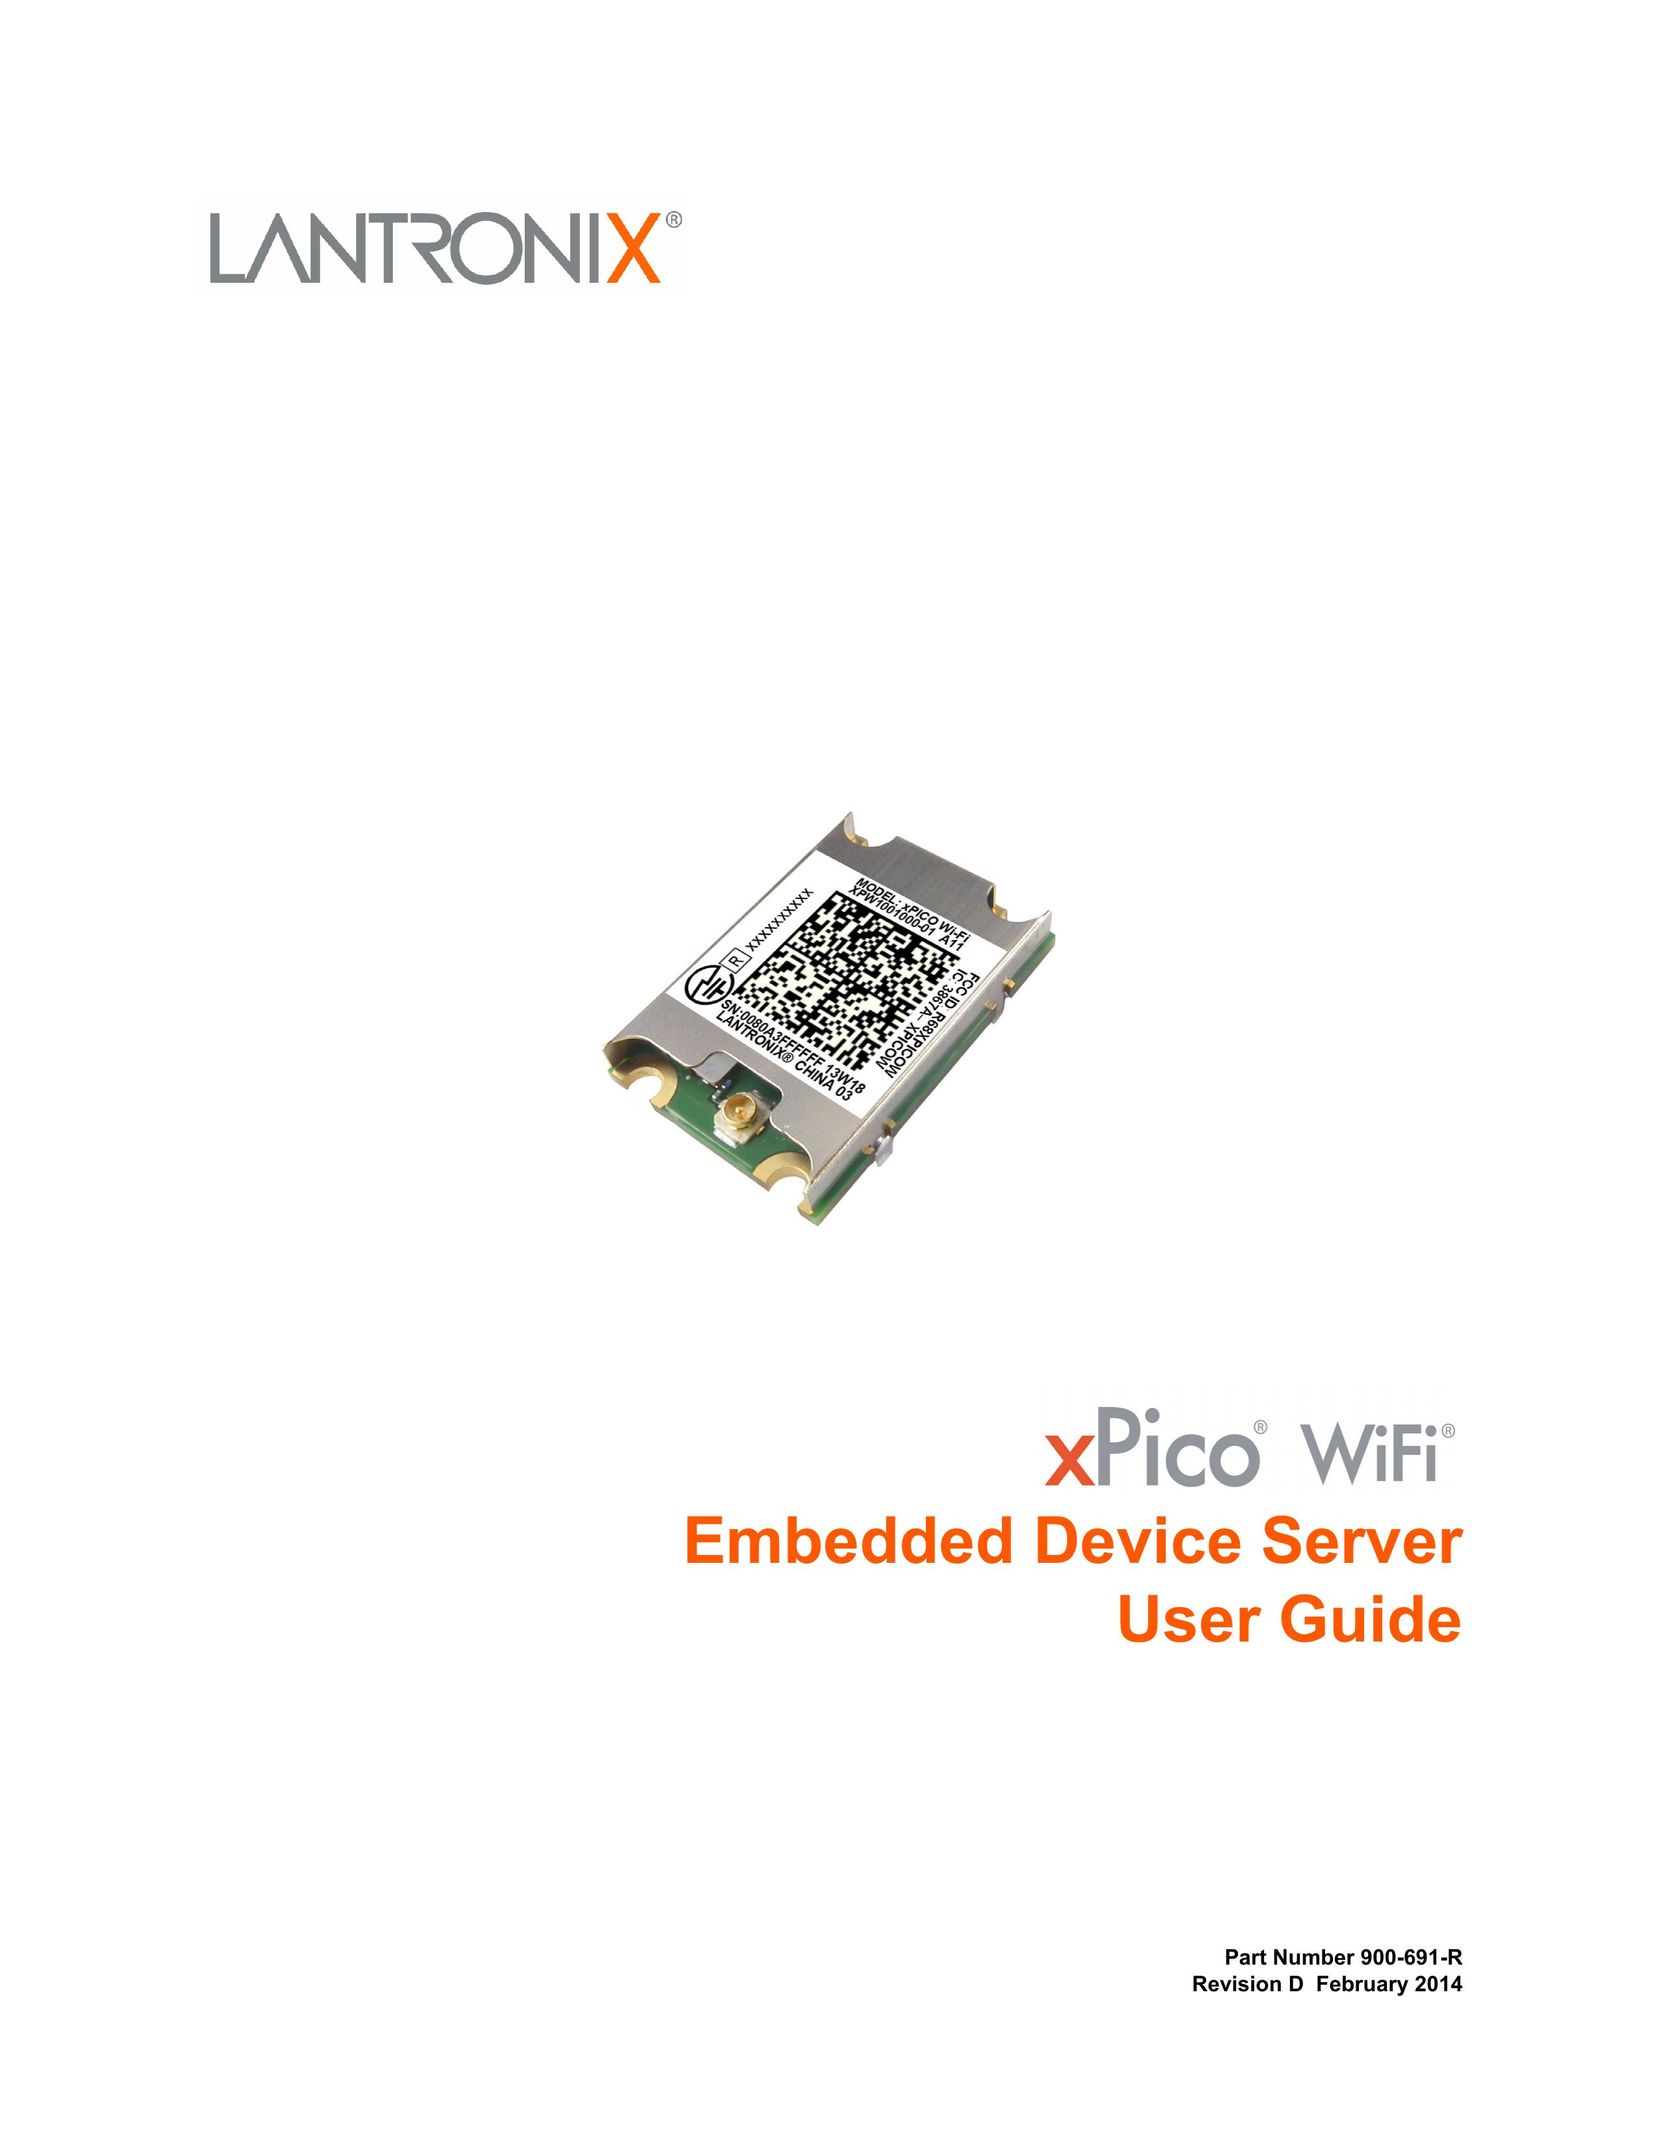 Lantronix 900-691-R Network Card User Manual